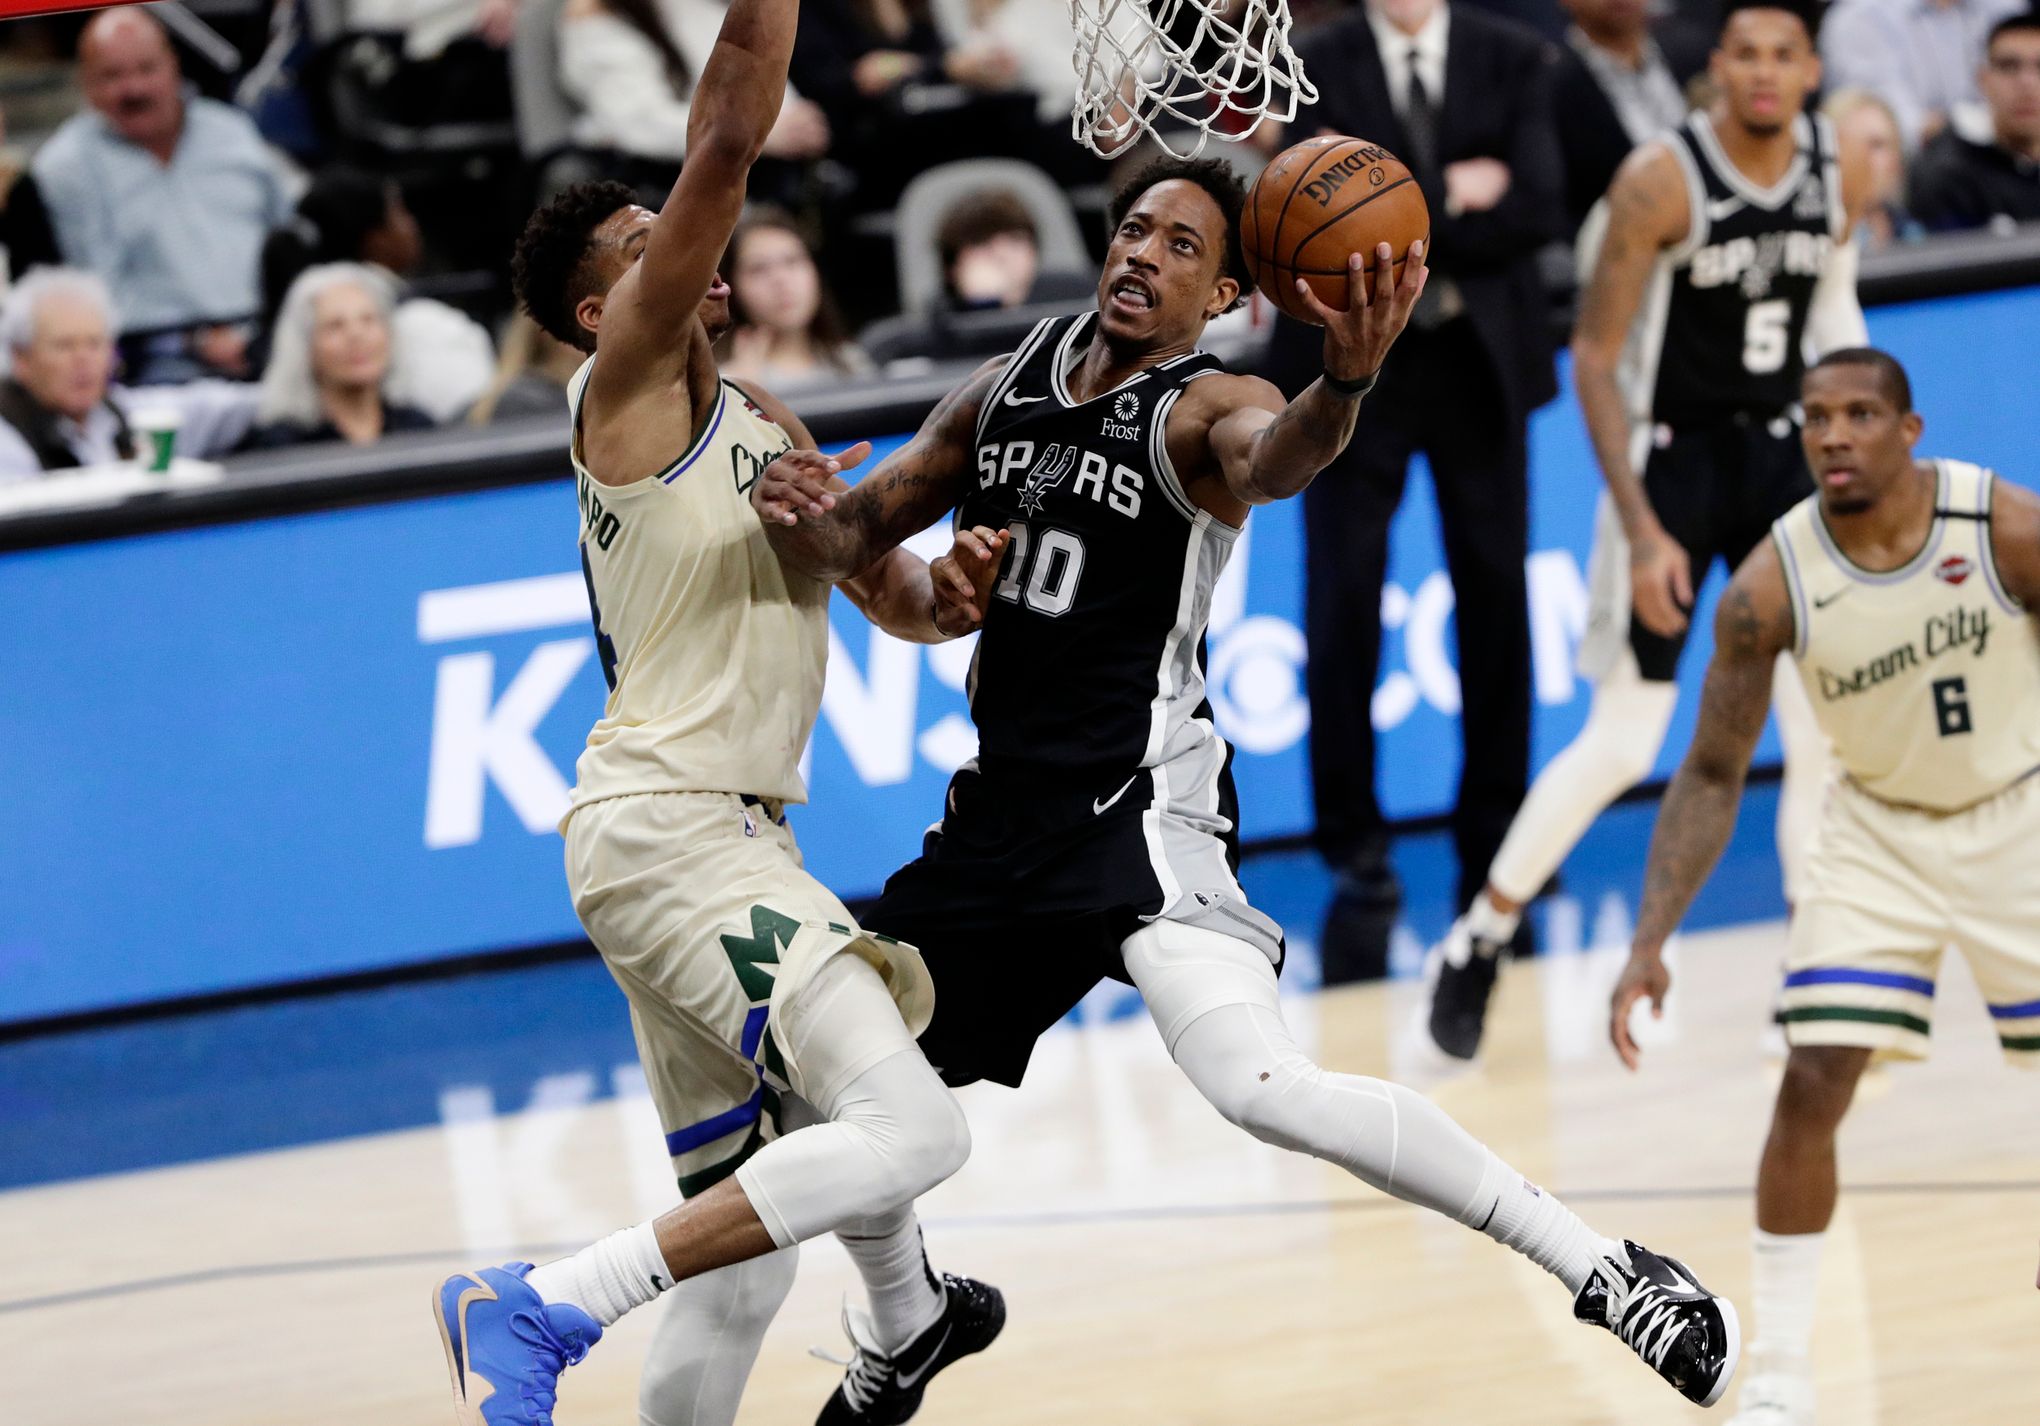 Spurs hit 19 3-pointers to stop NBA-best Bucks, 126-104